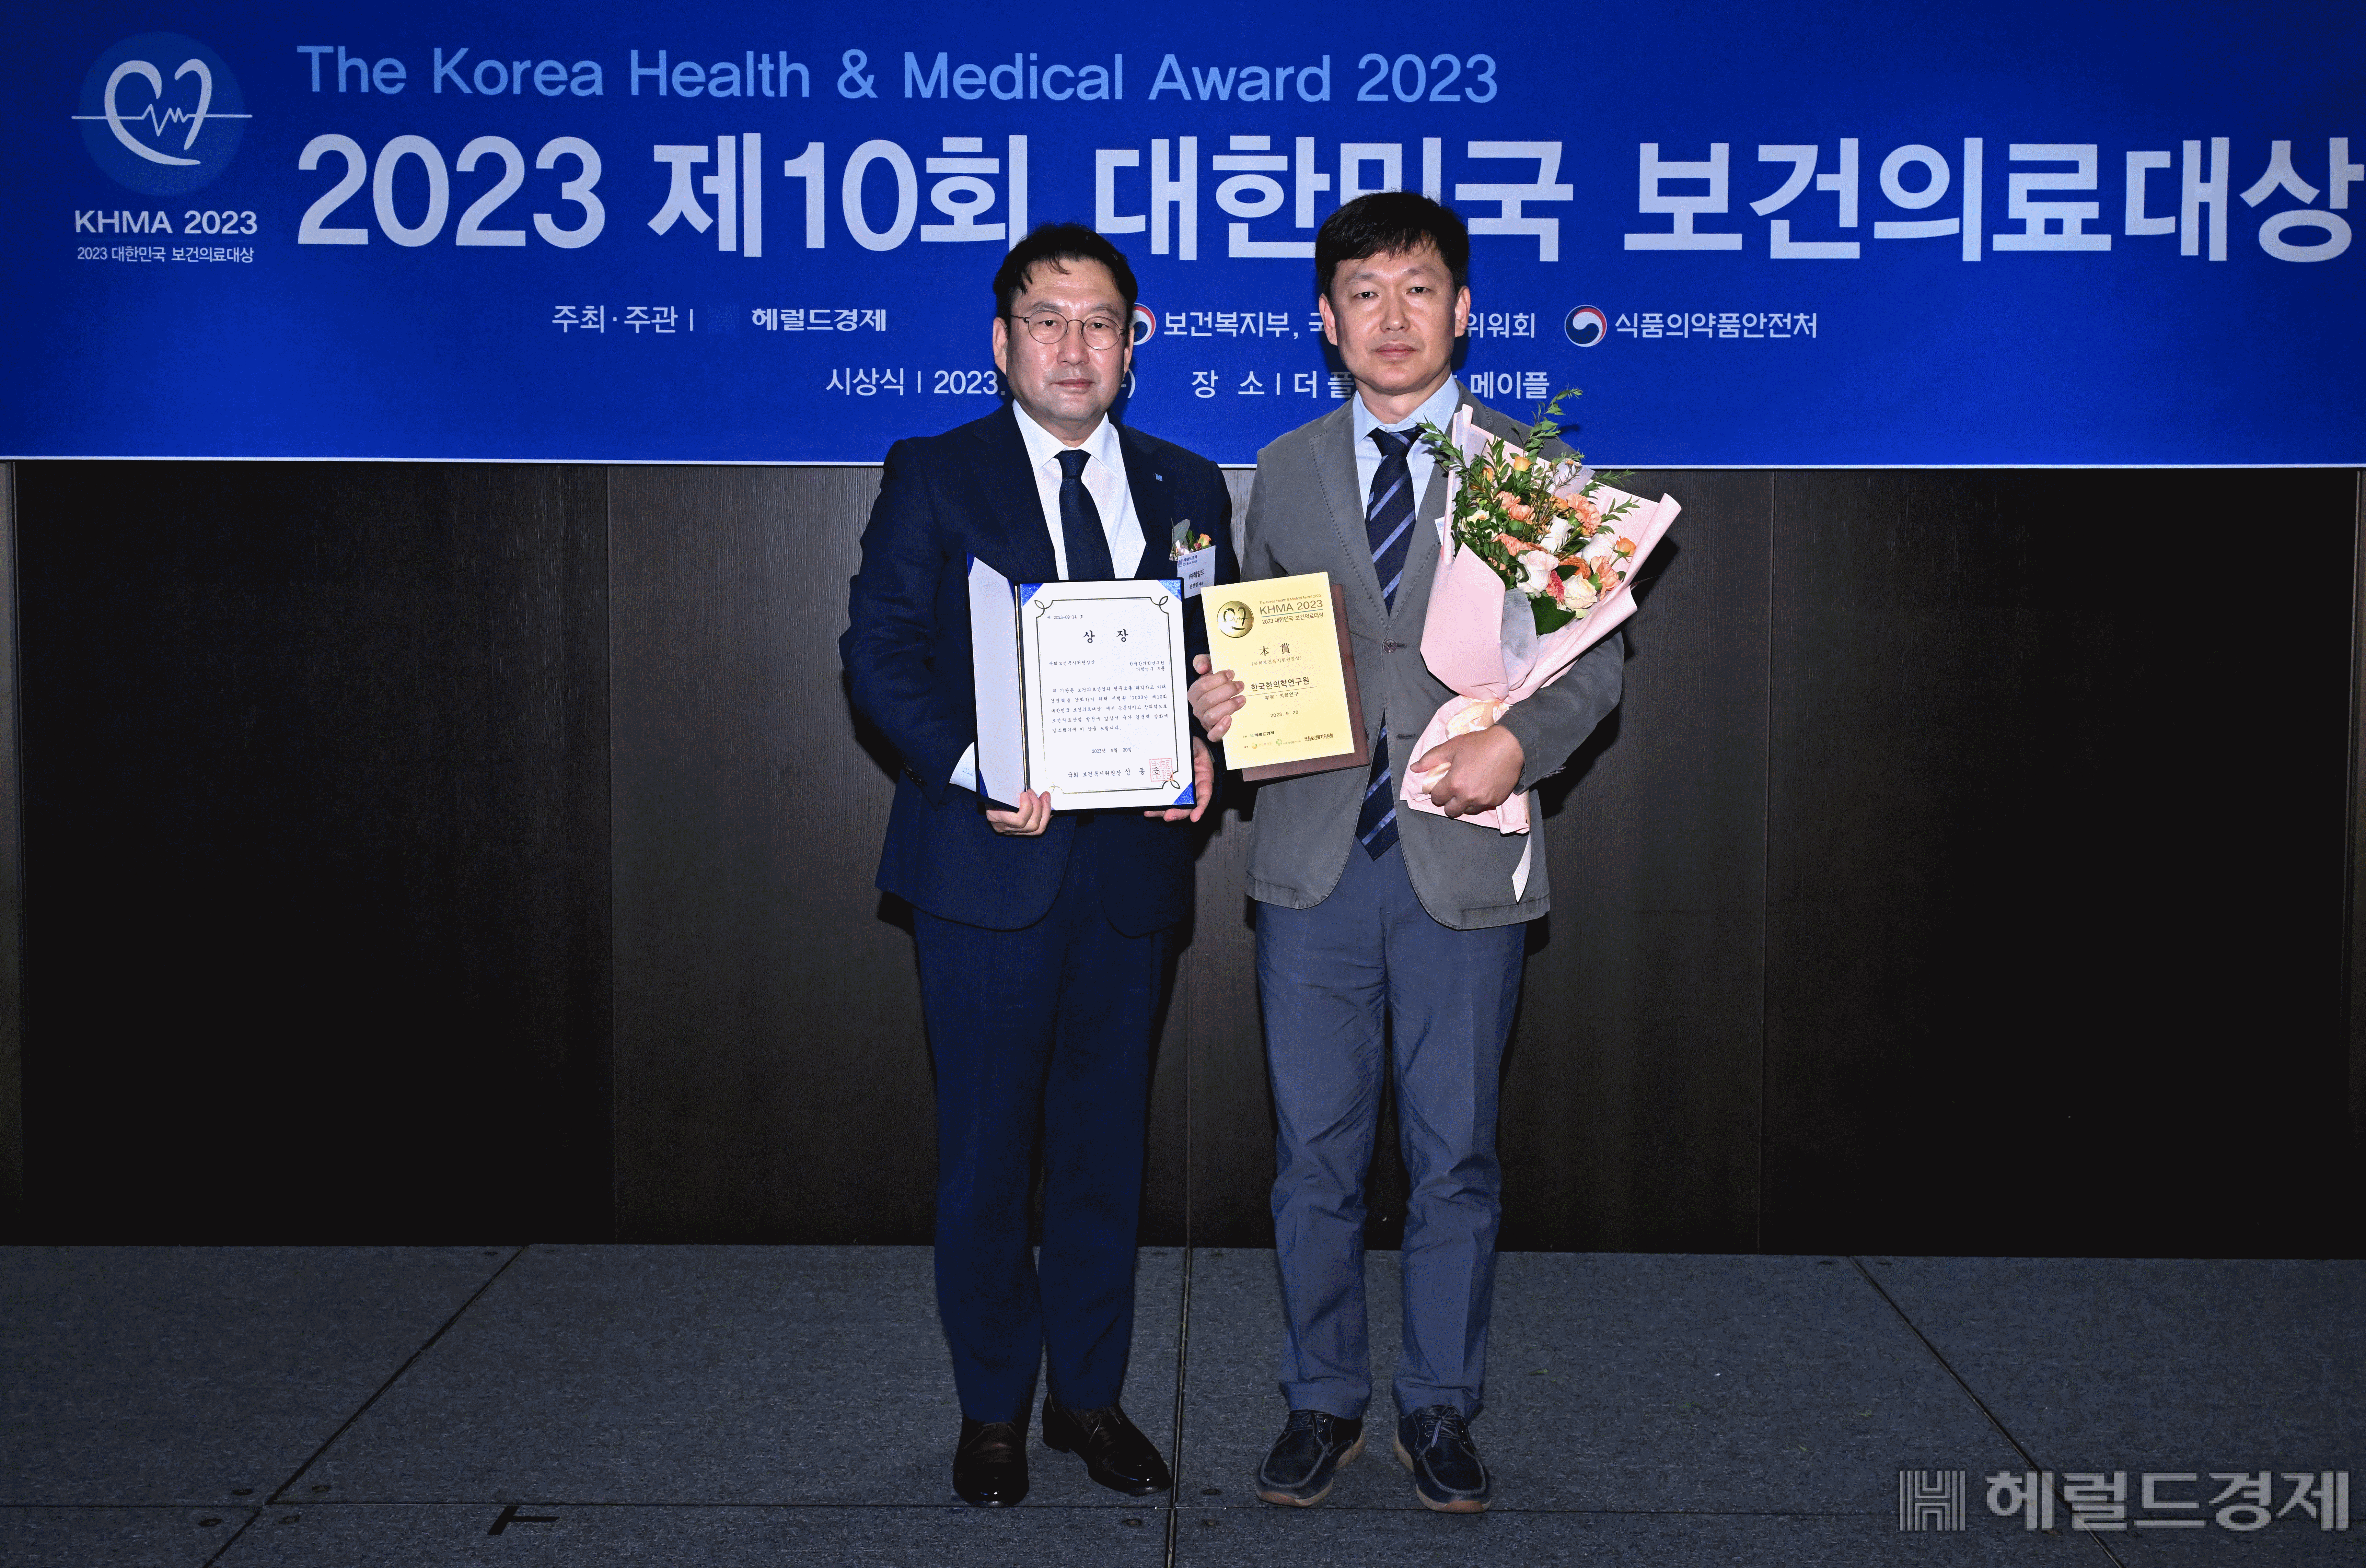 The Korea Health & Medical Award 2023